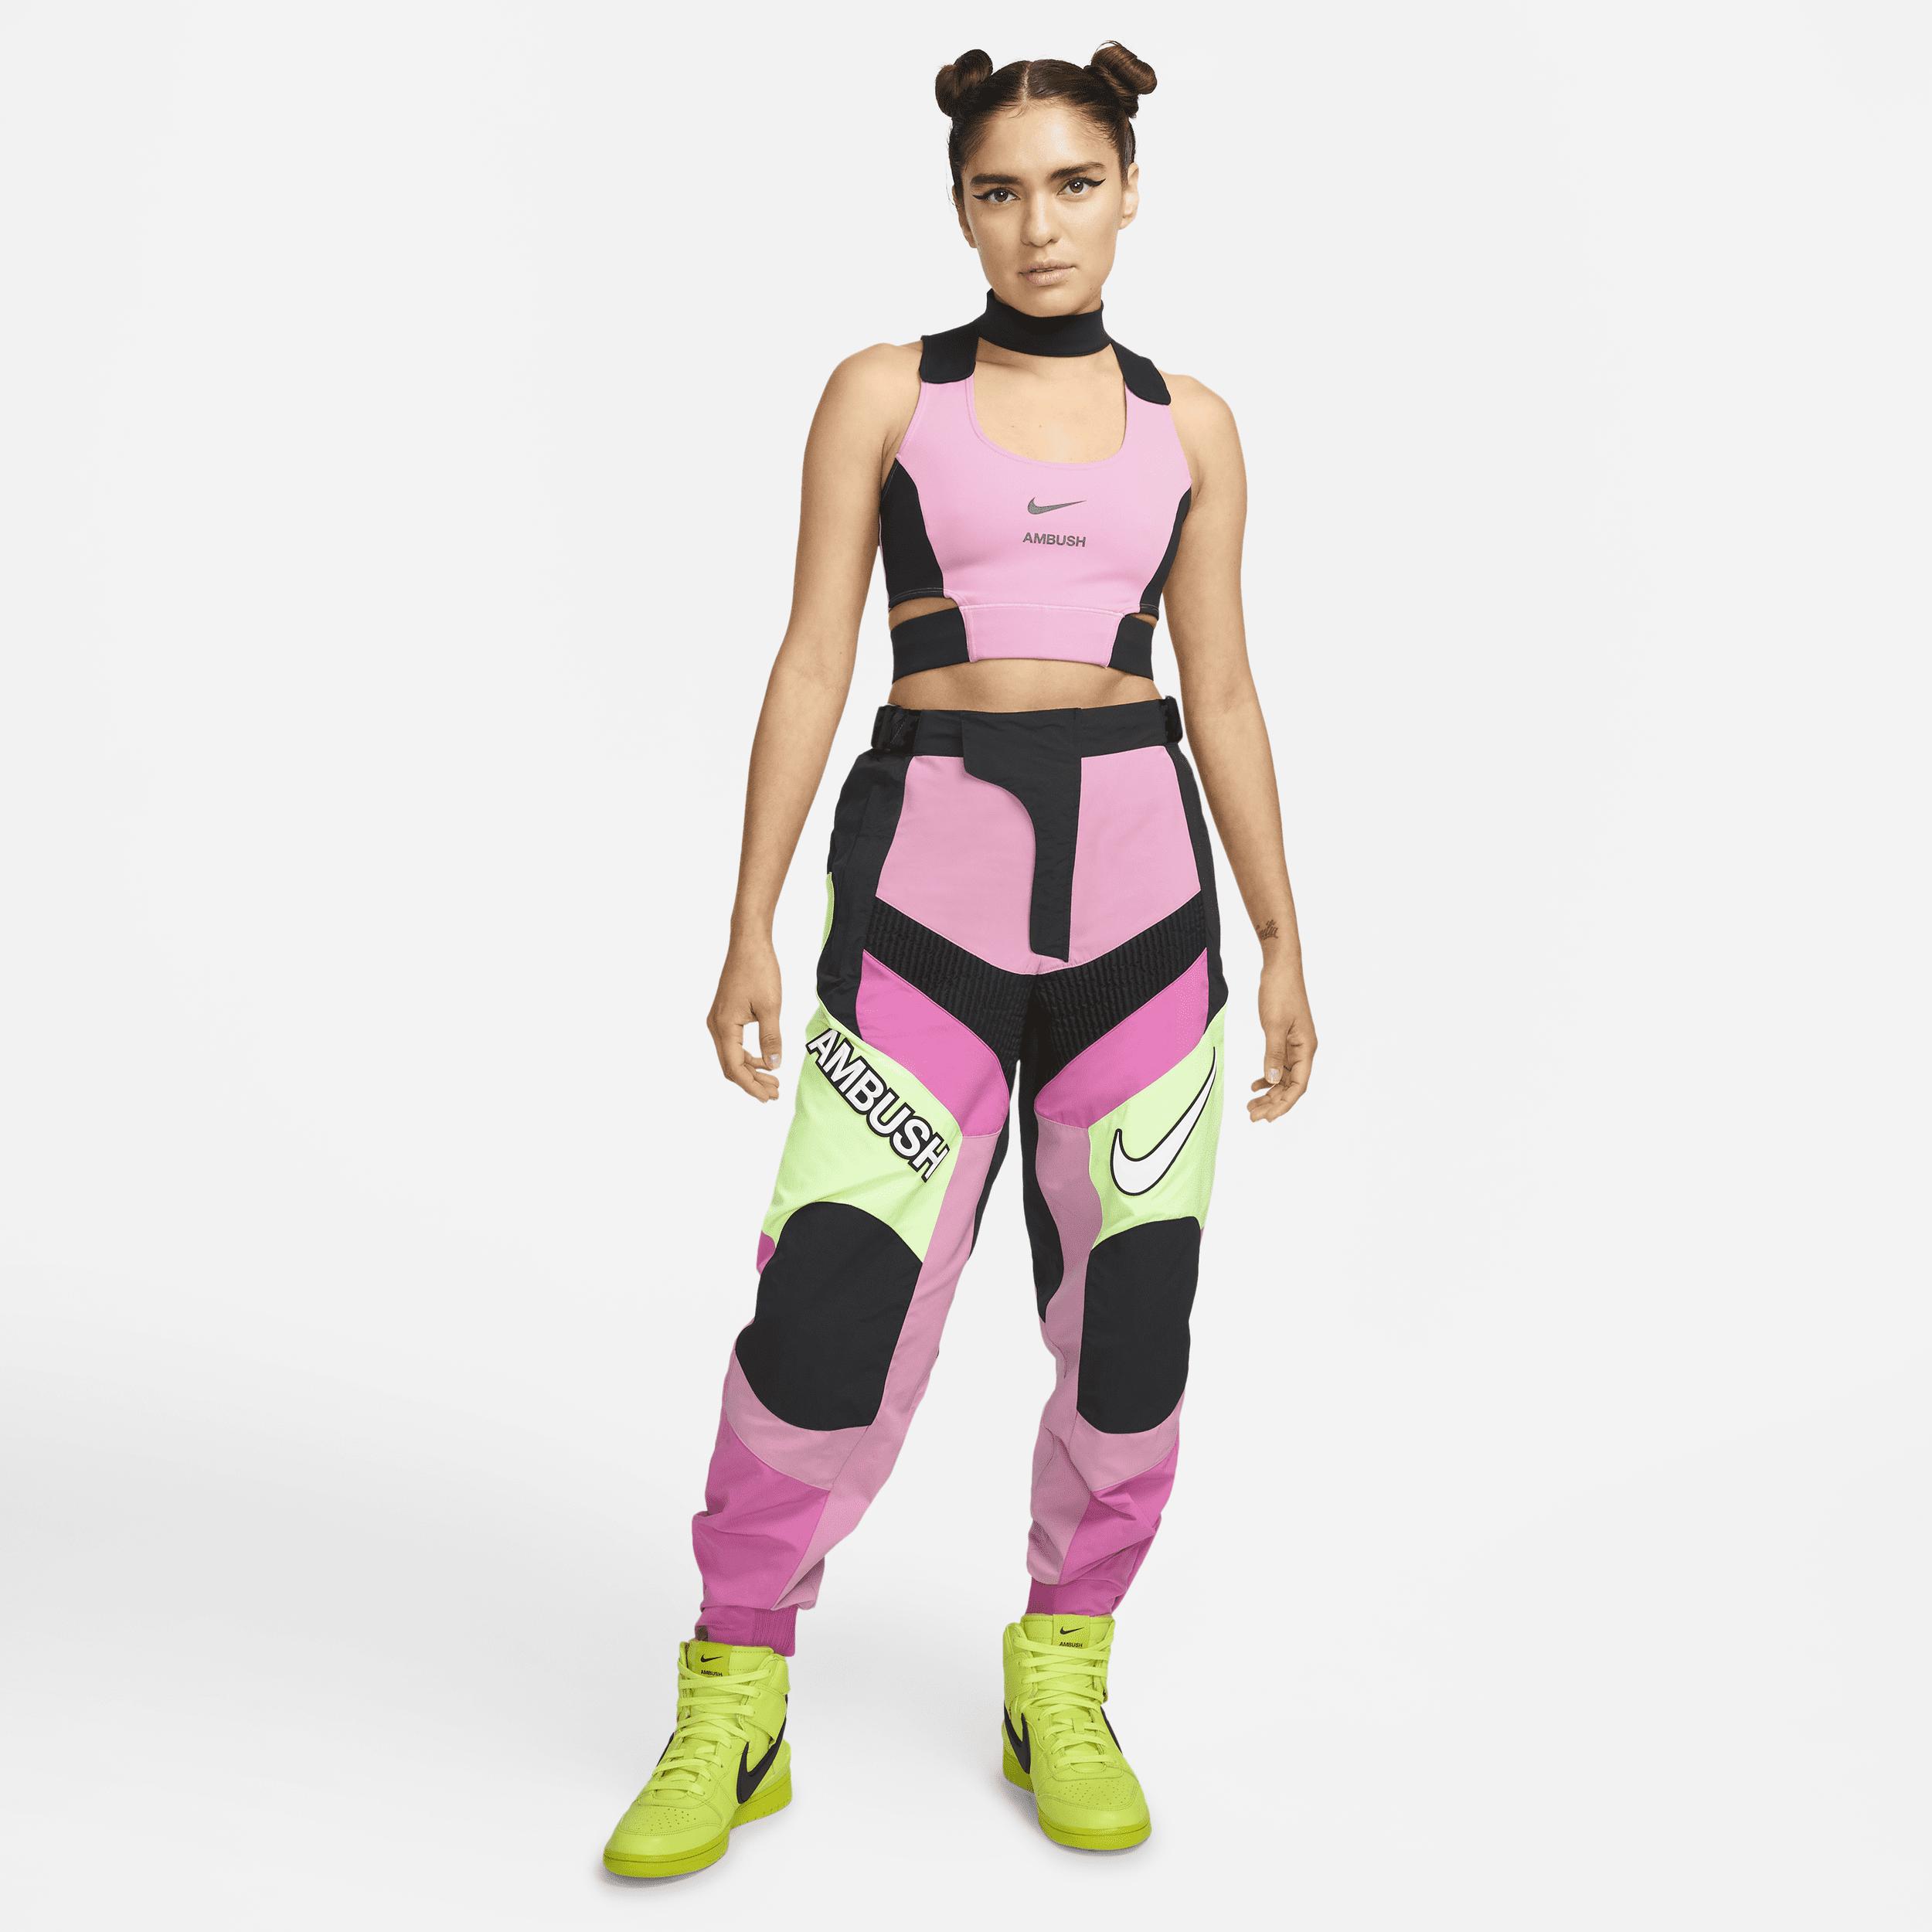 Nike X Ambush Crop Top in Pink | Lyst